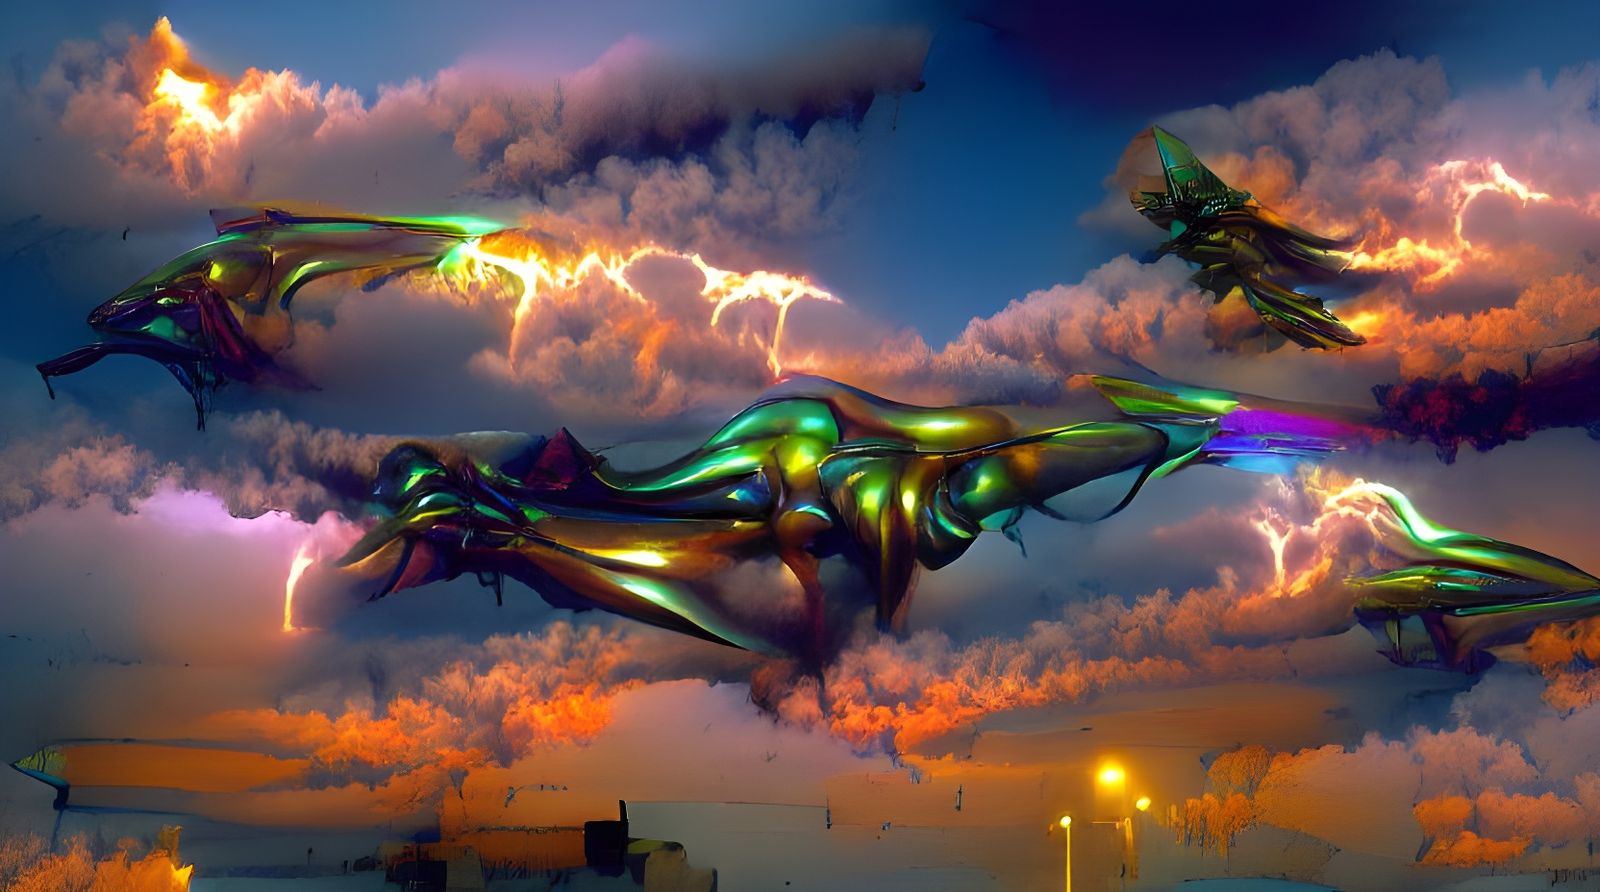 Storm dragons of Vek'ot'vem